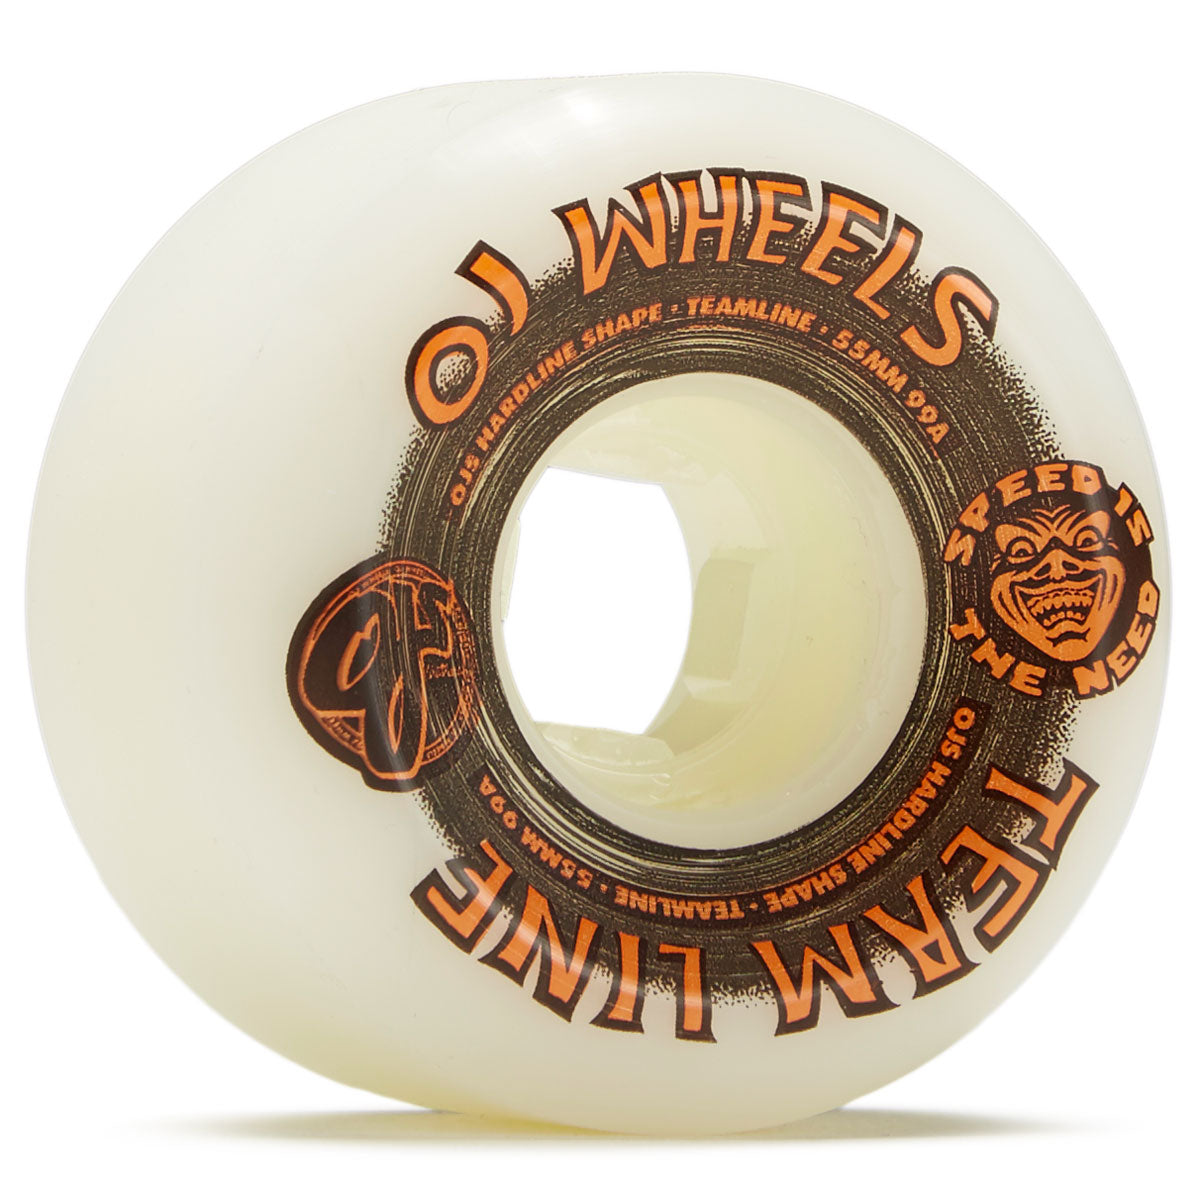 OJ Team Line Original Hardline 99a Skateboard Wheels - White/Black/Orange - 55mm image 1